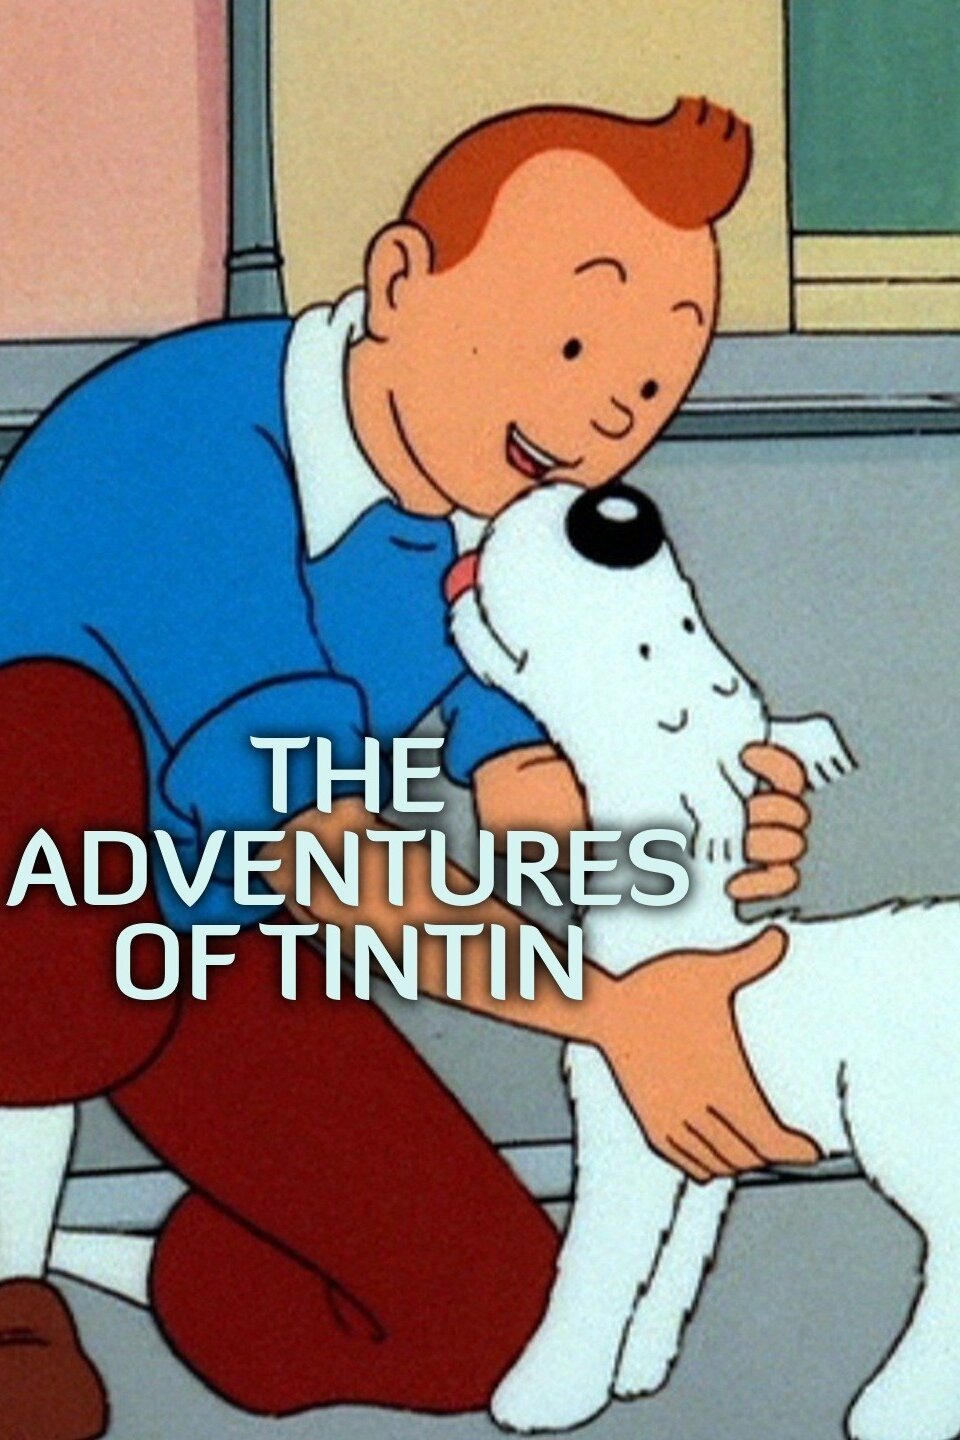 The Adventures of Tintin - Rotten Tomatoes